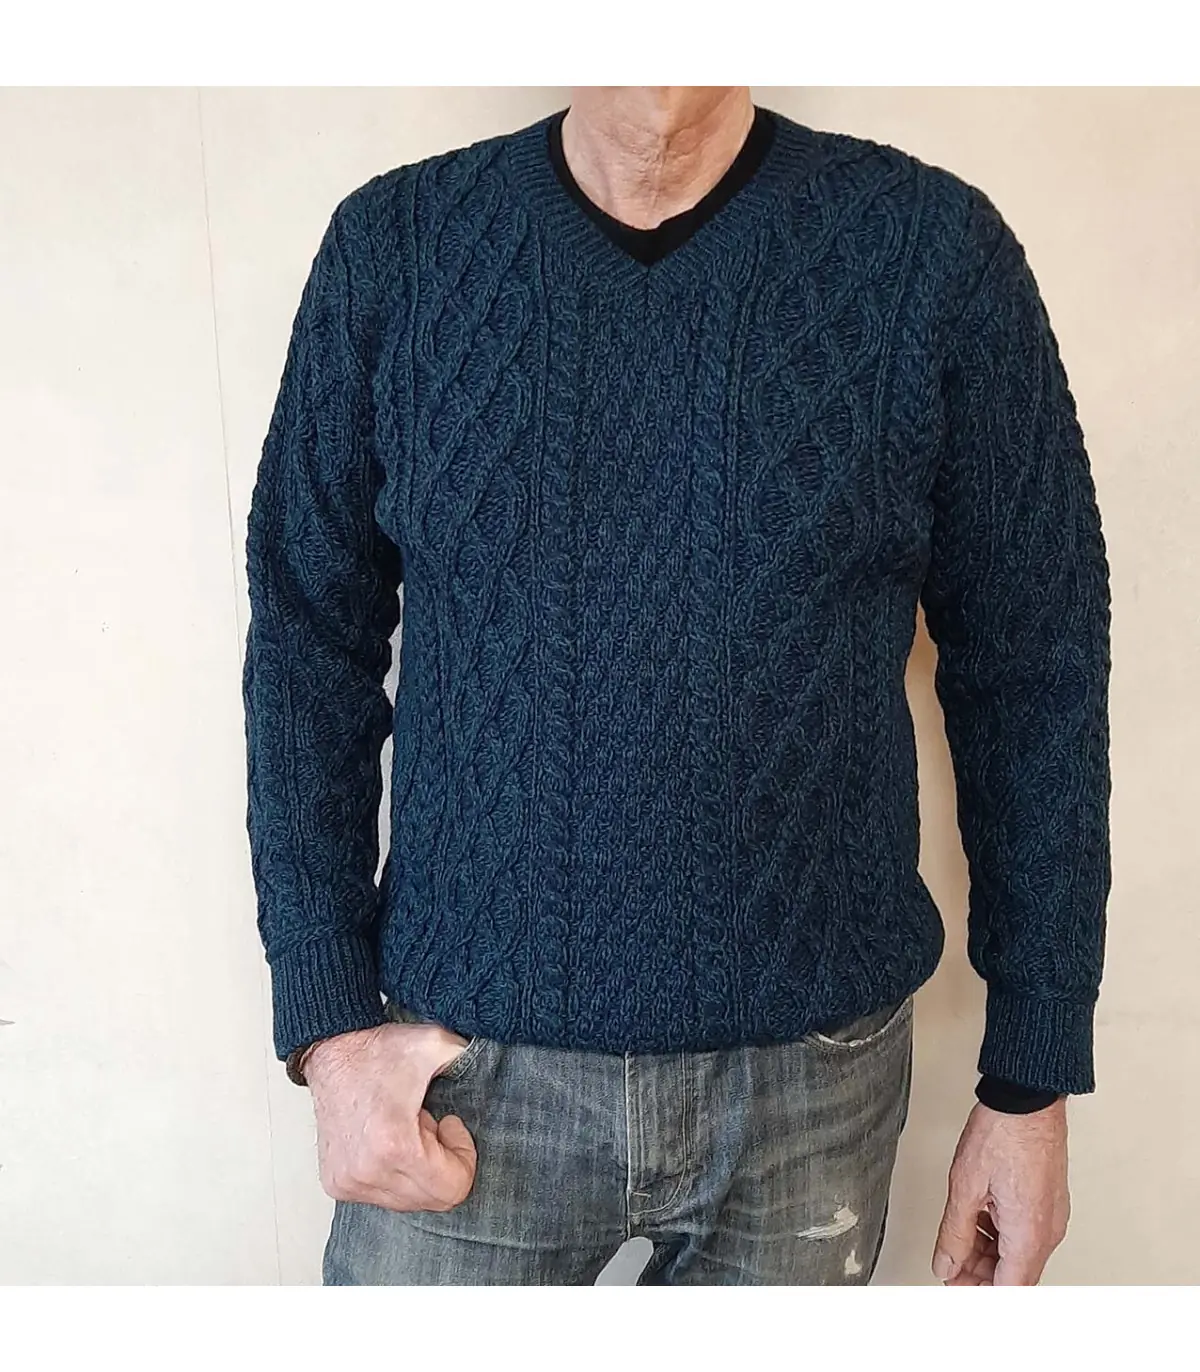 Chaqueta lana con cuello de punto gris - Hombre